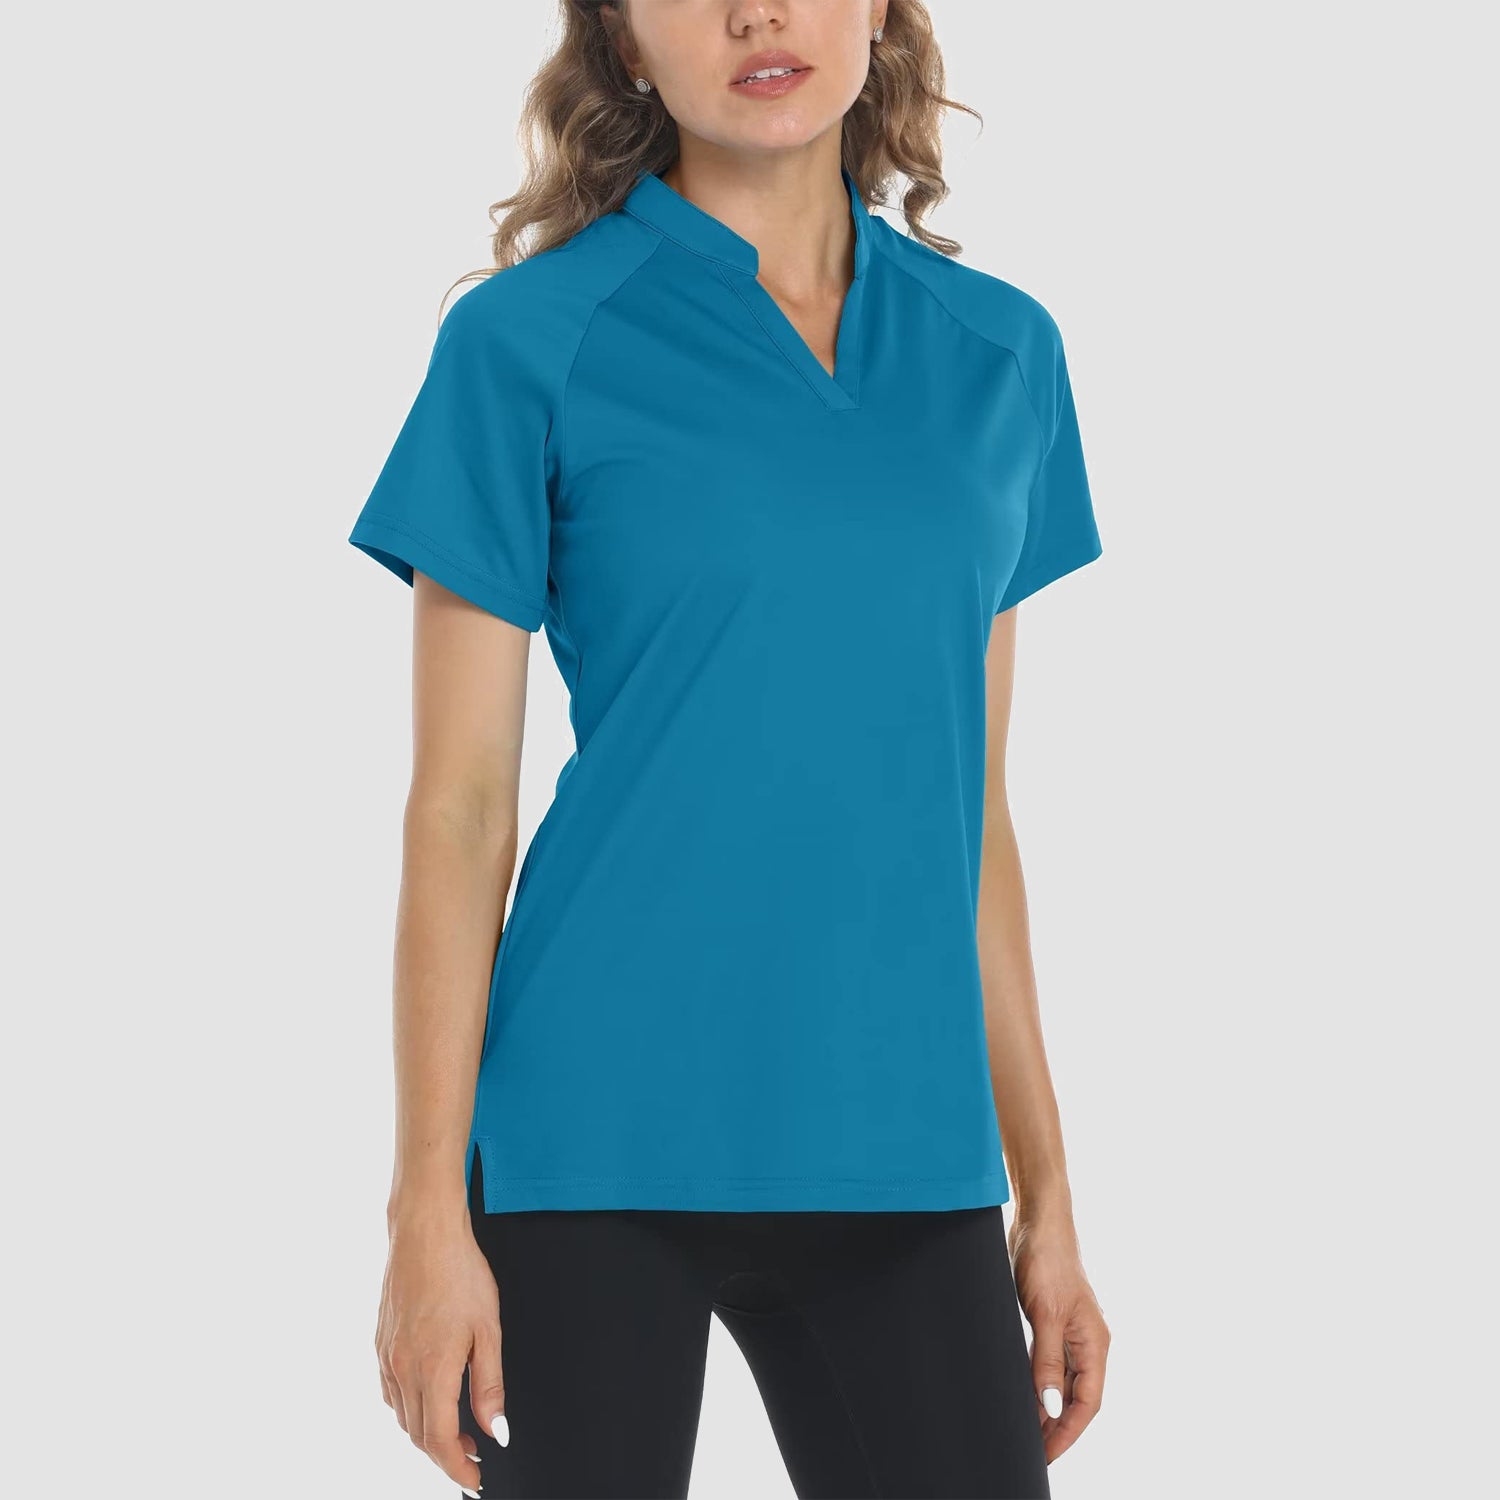 Women's T-Shirt Short Sleeve Quick Dry V-Neck Athletic Tee Shirt